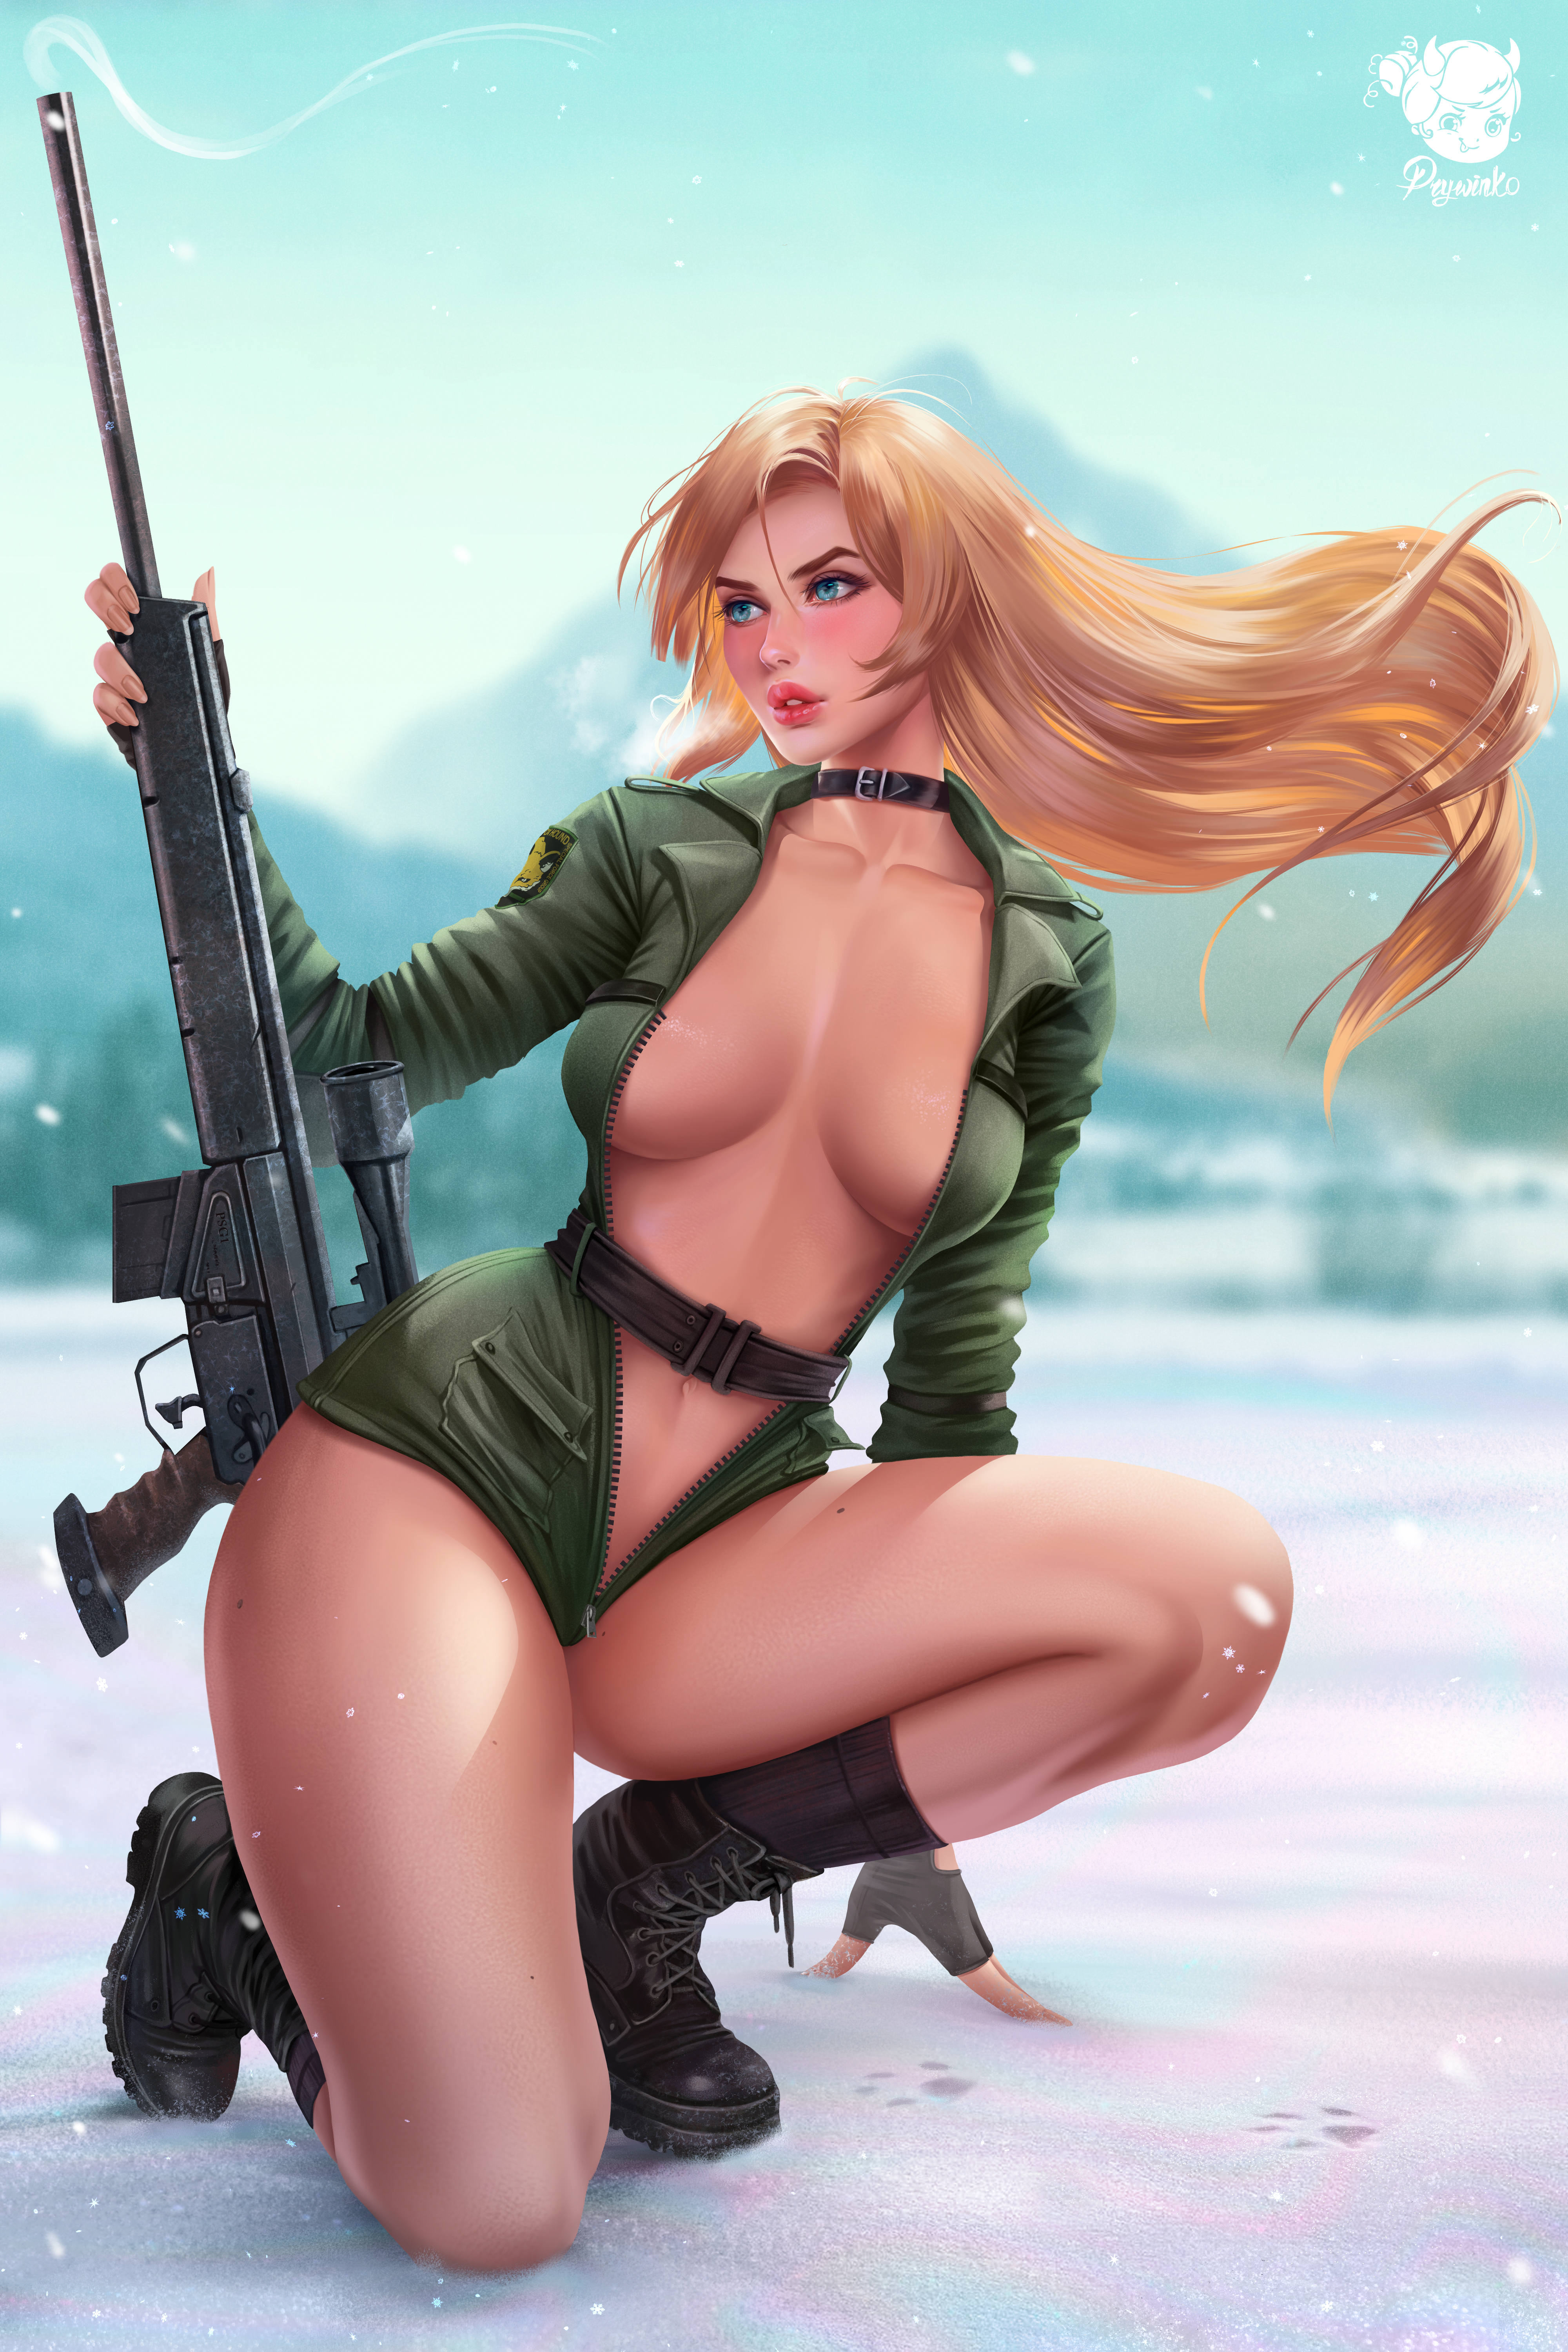 General 4000x6000 Sniper Wolf Metal Gear Solid video games video game girls blonde sniper rifle rifles winter bodysuit unzipped no bra belly thick thigh kneeling 2D artwork drawing fan art Prywinko